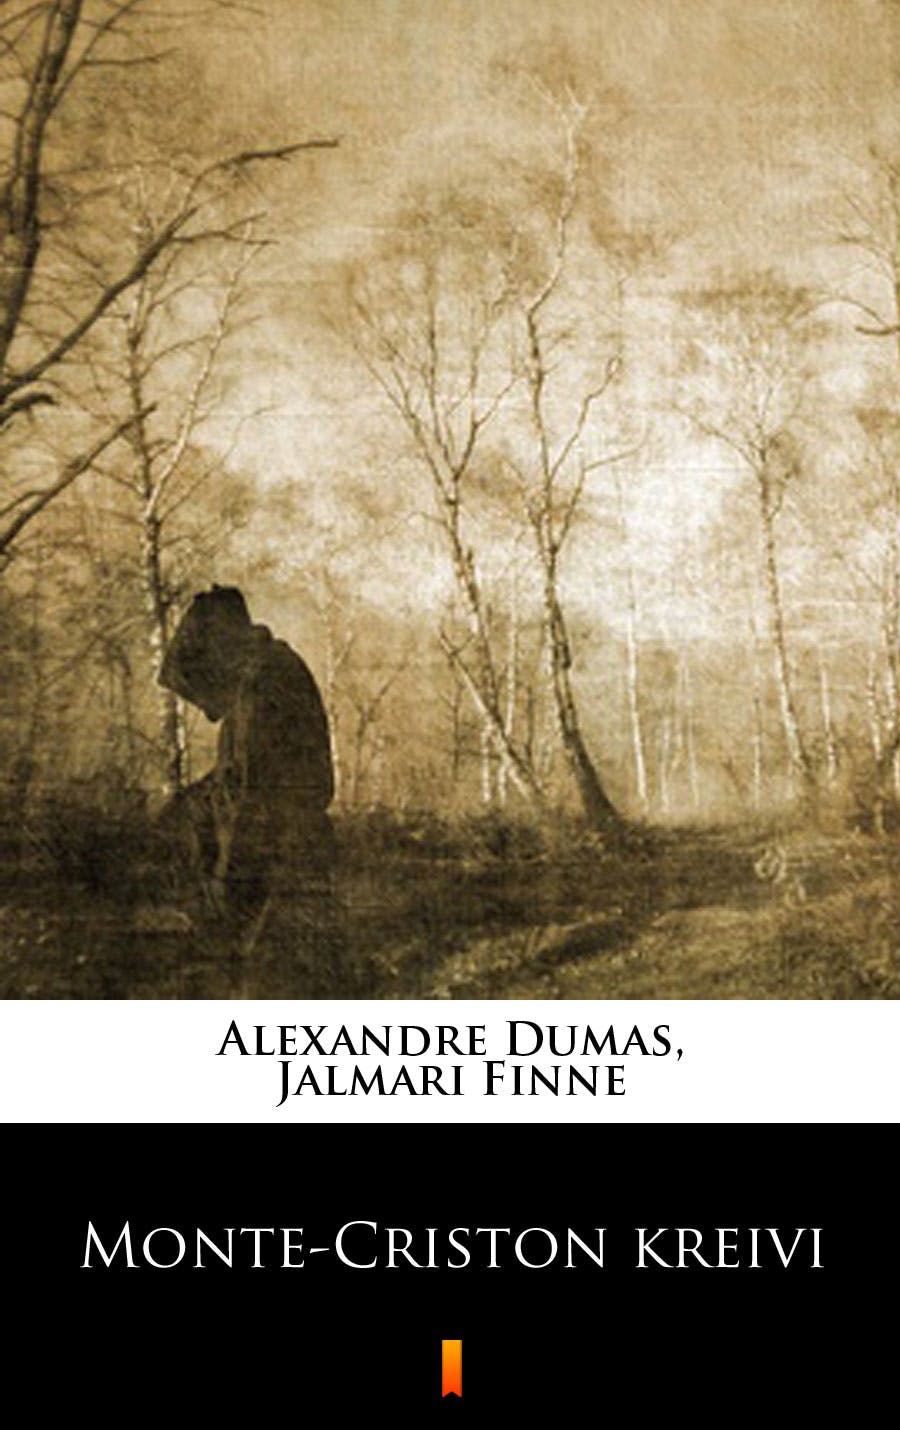 Monte-Criston kreivi - Alexandre Dumas, Jalmari Finne